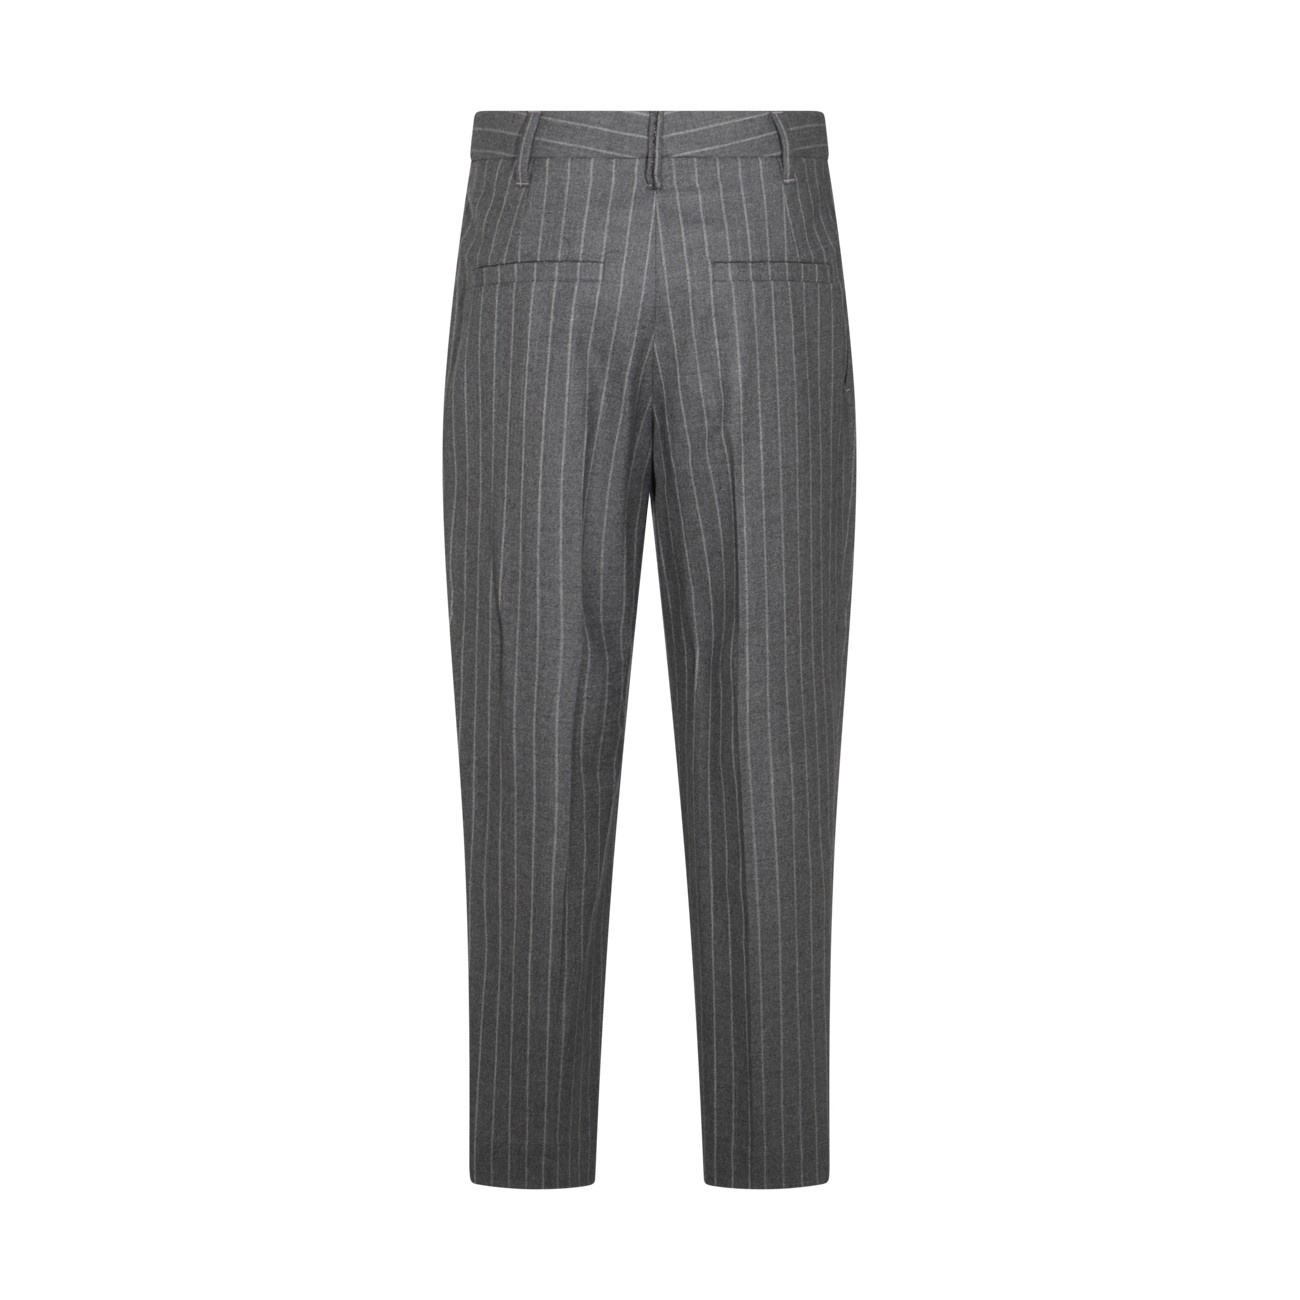 grey wool pants - 2